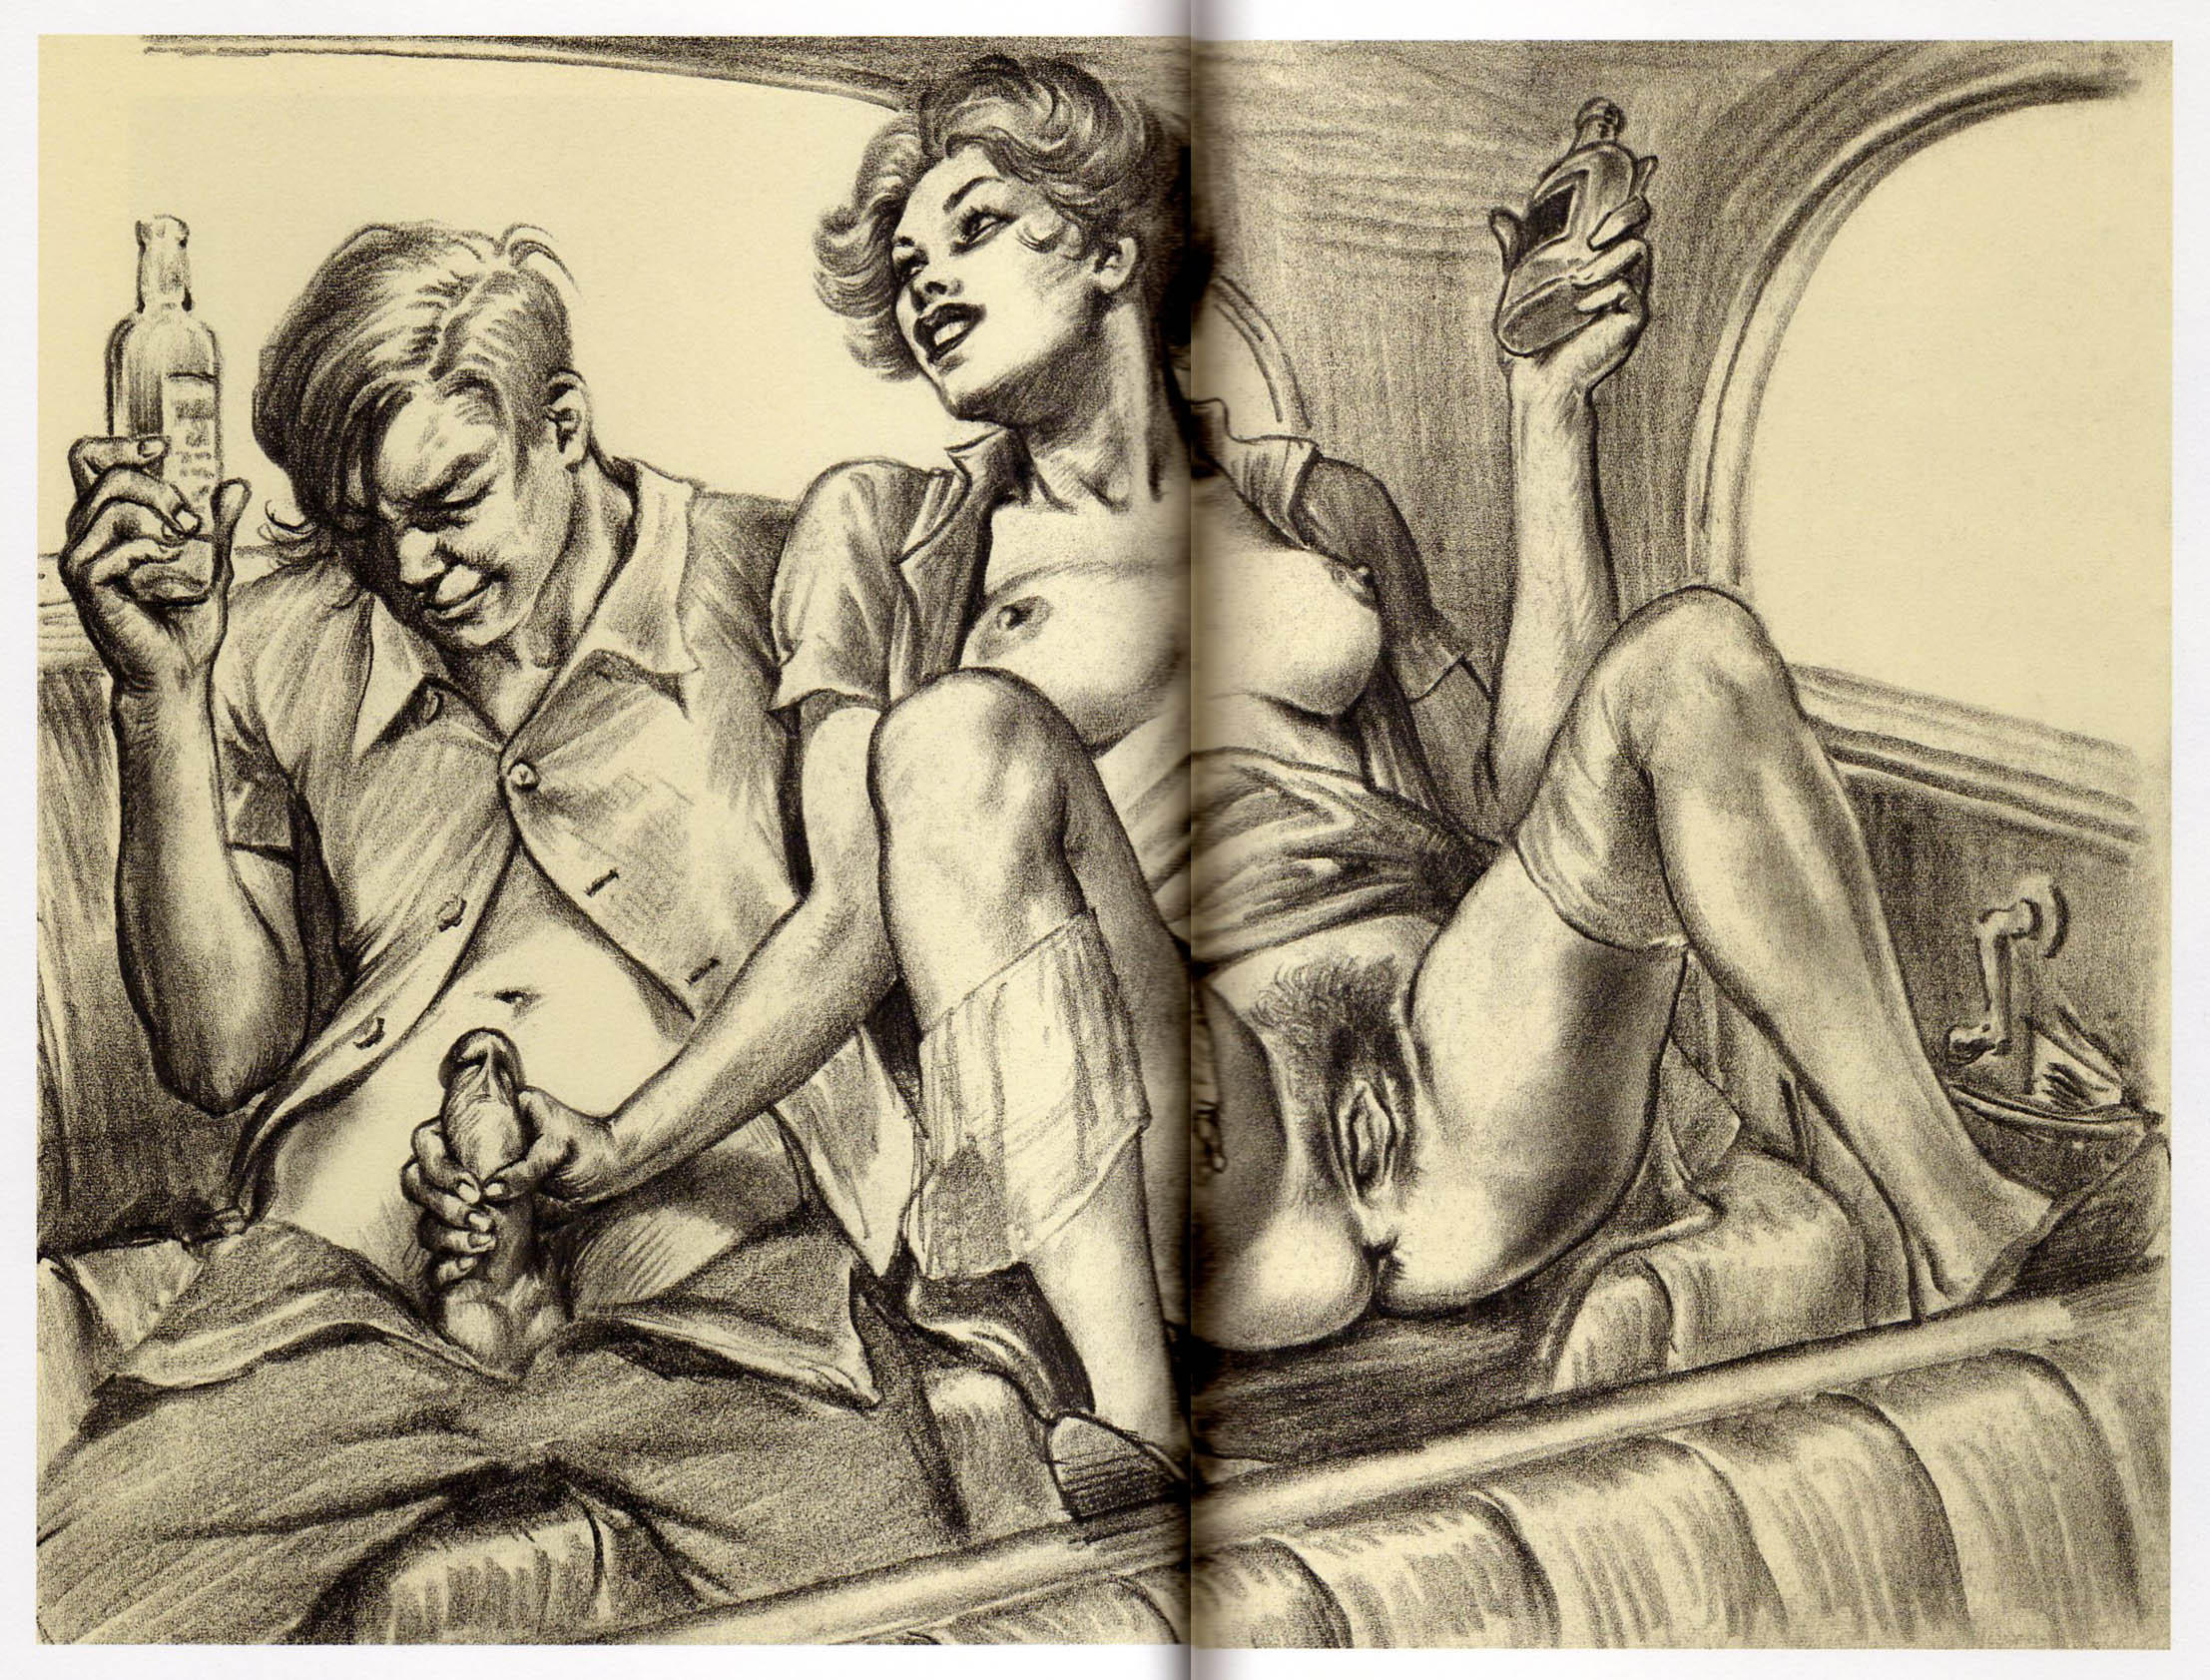 Vintage erotic art - no pee.